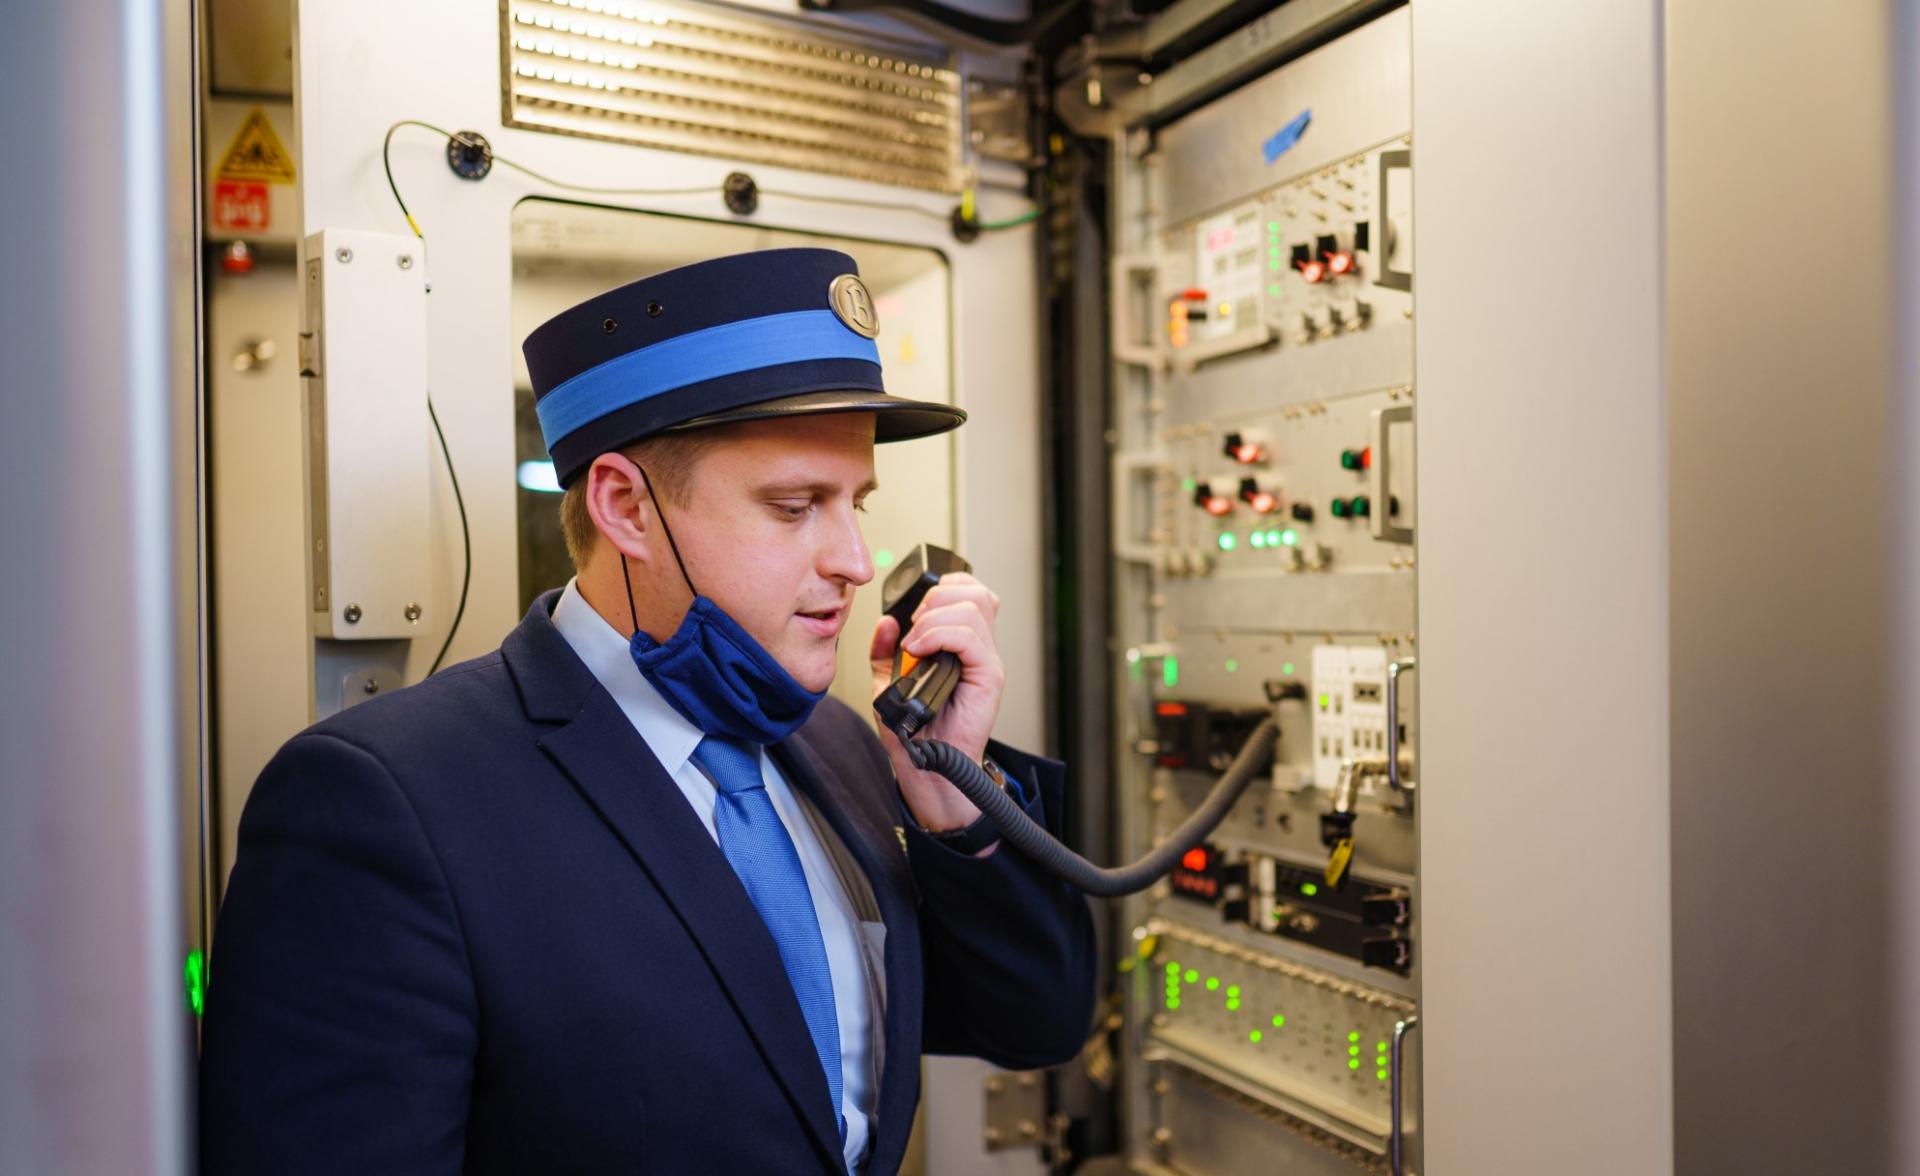 Employee using passenger communication unit from audio communication system